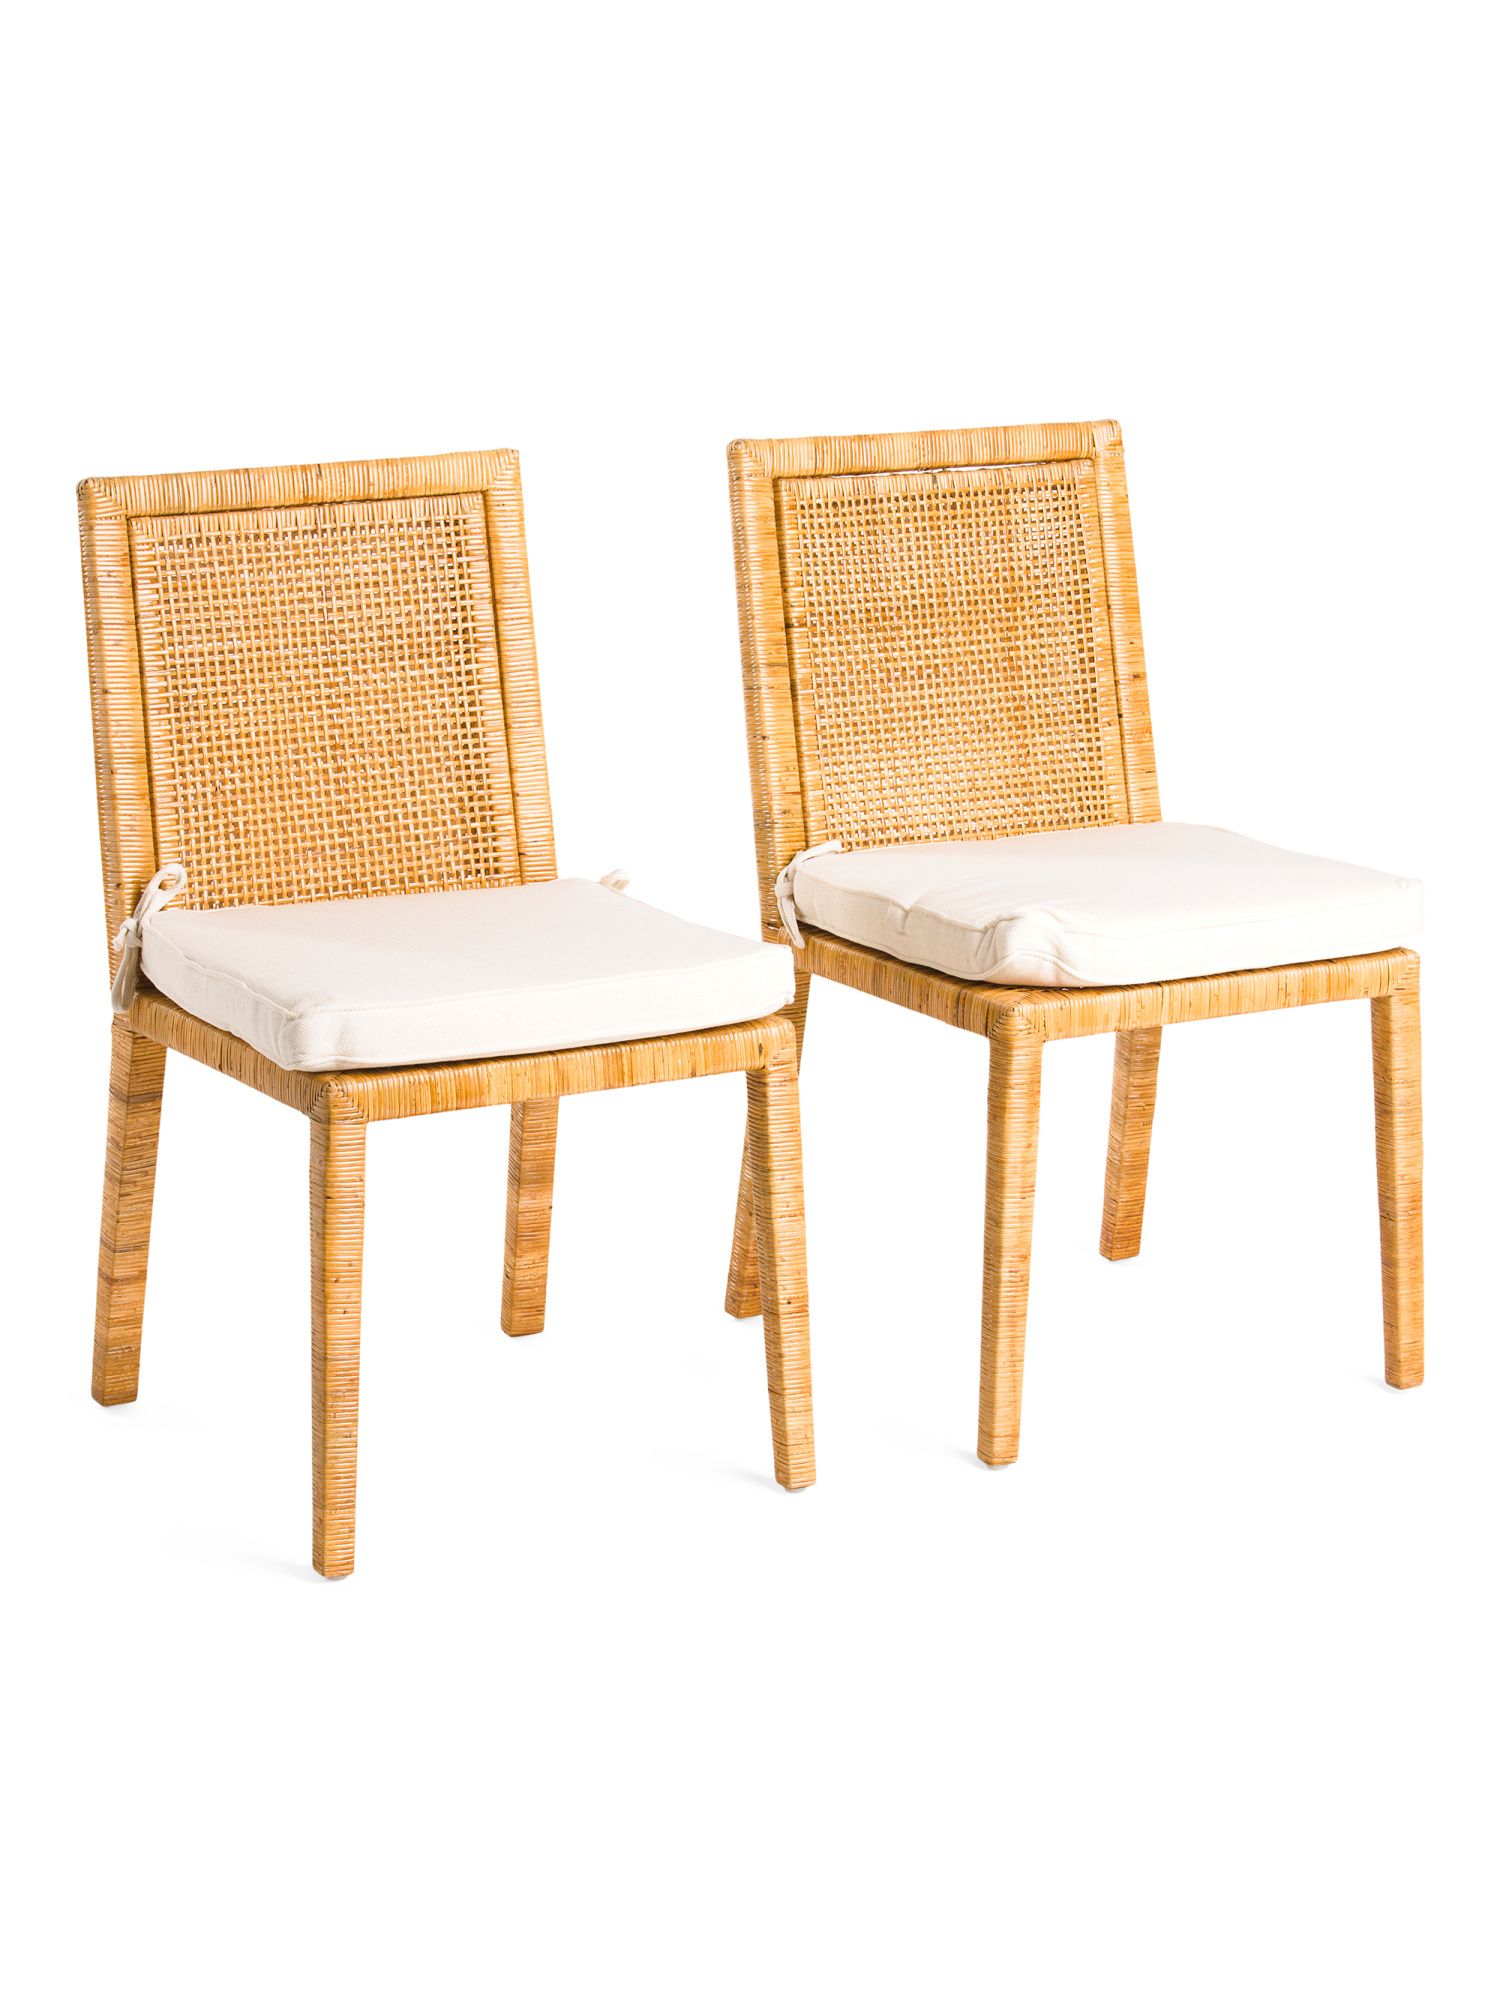 Set Of 2 Rattan Dining Chairs | The Global Decor Shop | Marshalls | Marshalls